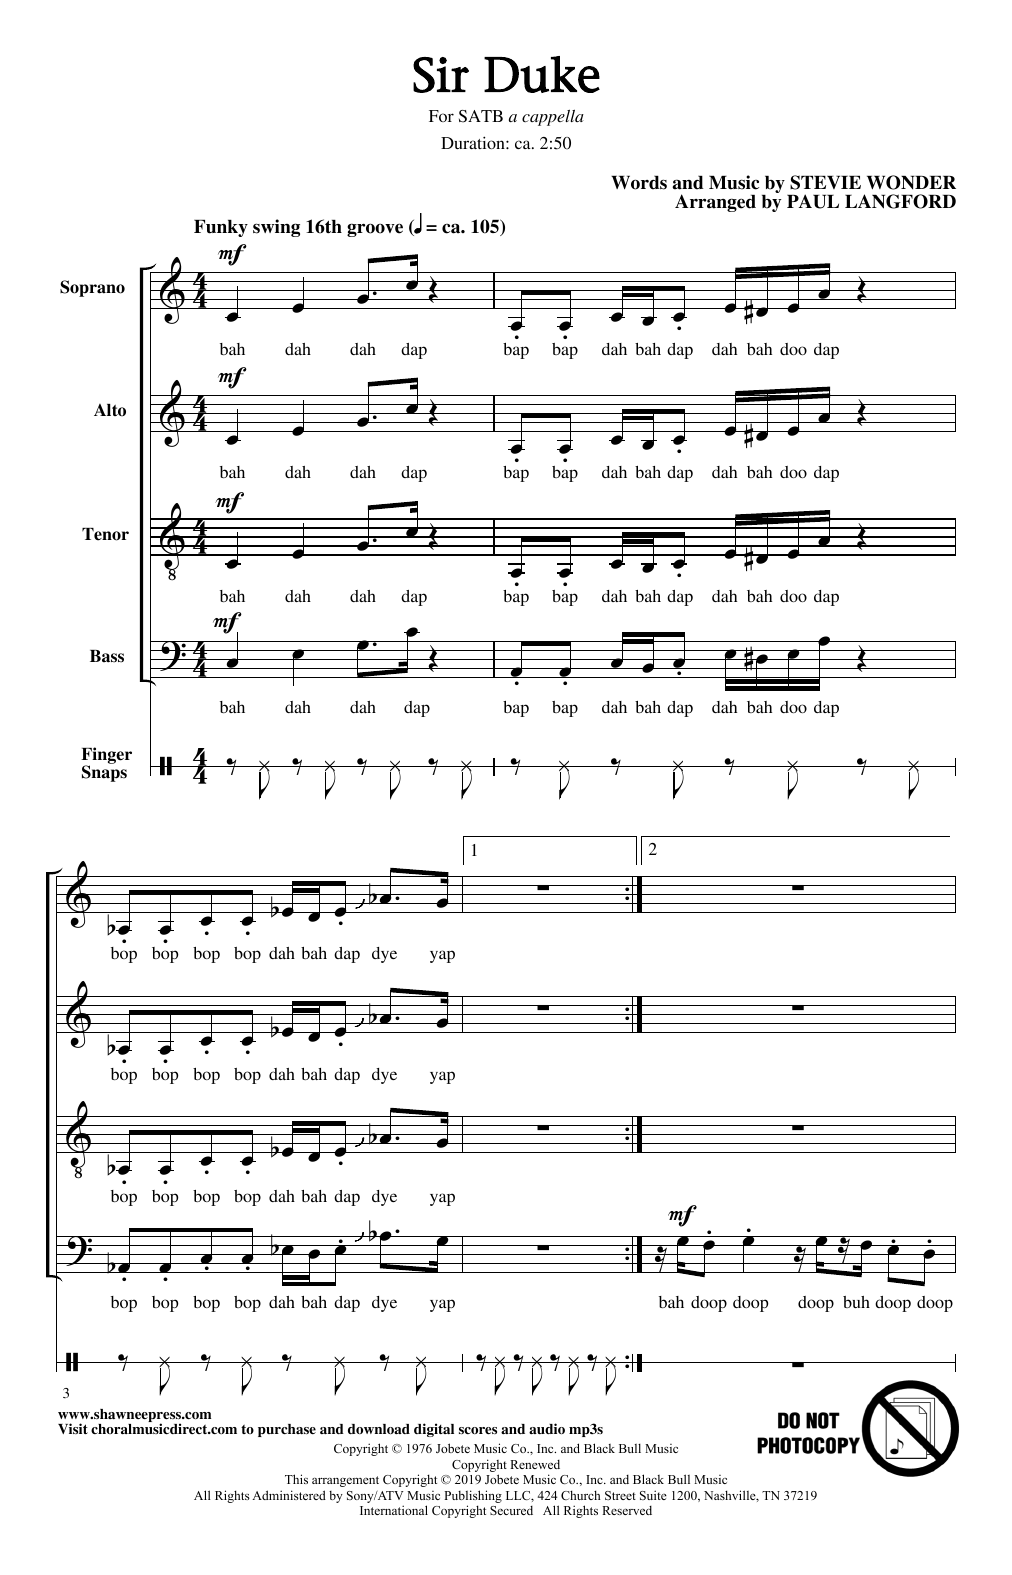 Stevie Wonder Sir Duke (arr. Paul Langford) Sheet Music Notes & Chords for SATB Choir - Download or Print PDF